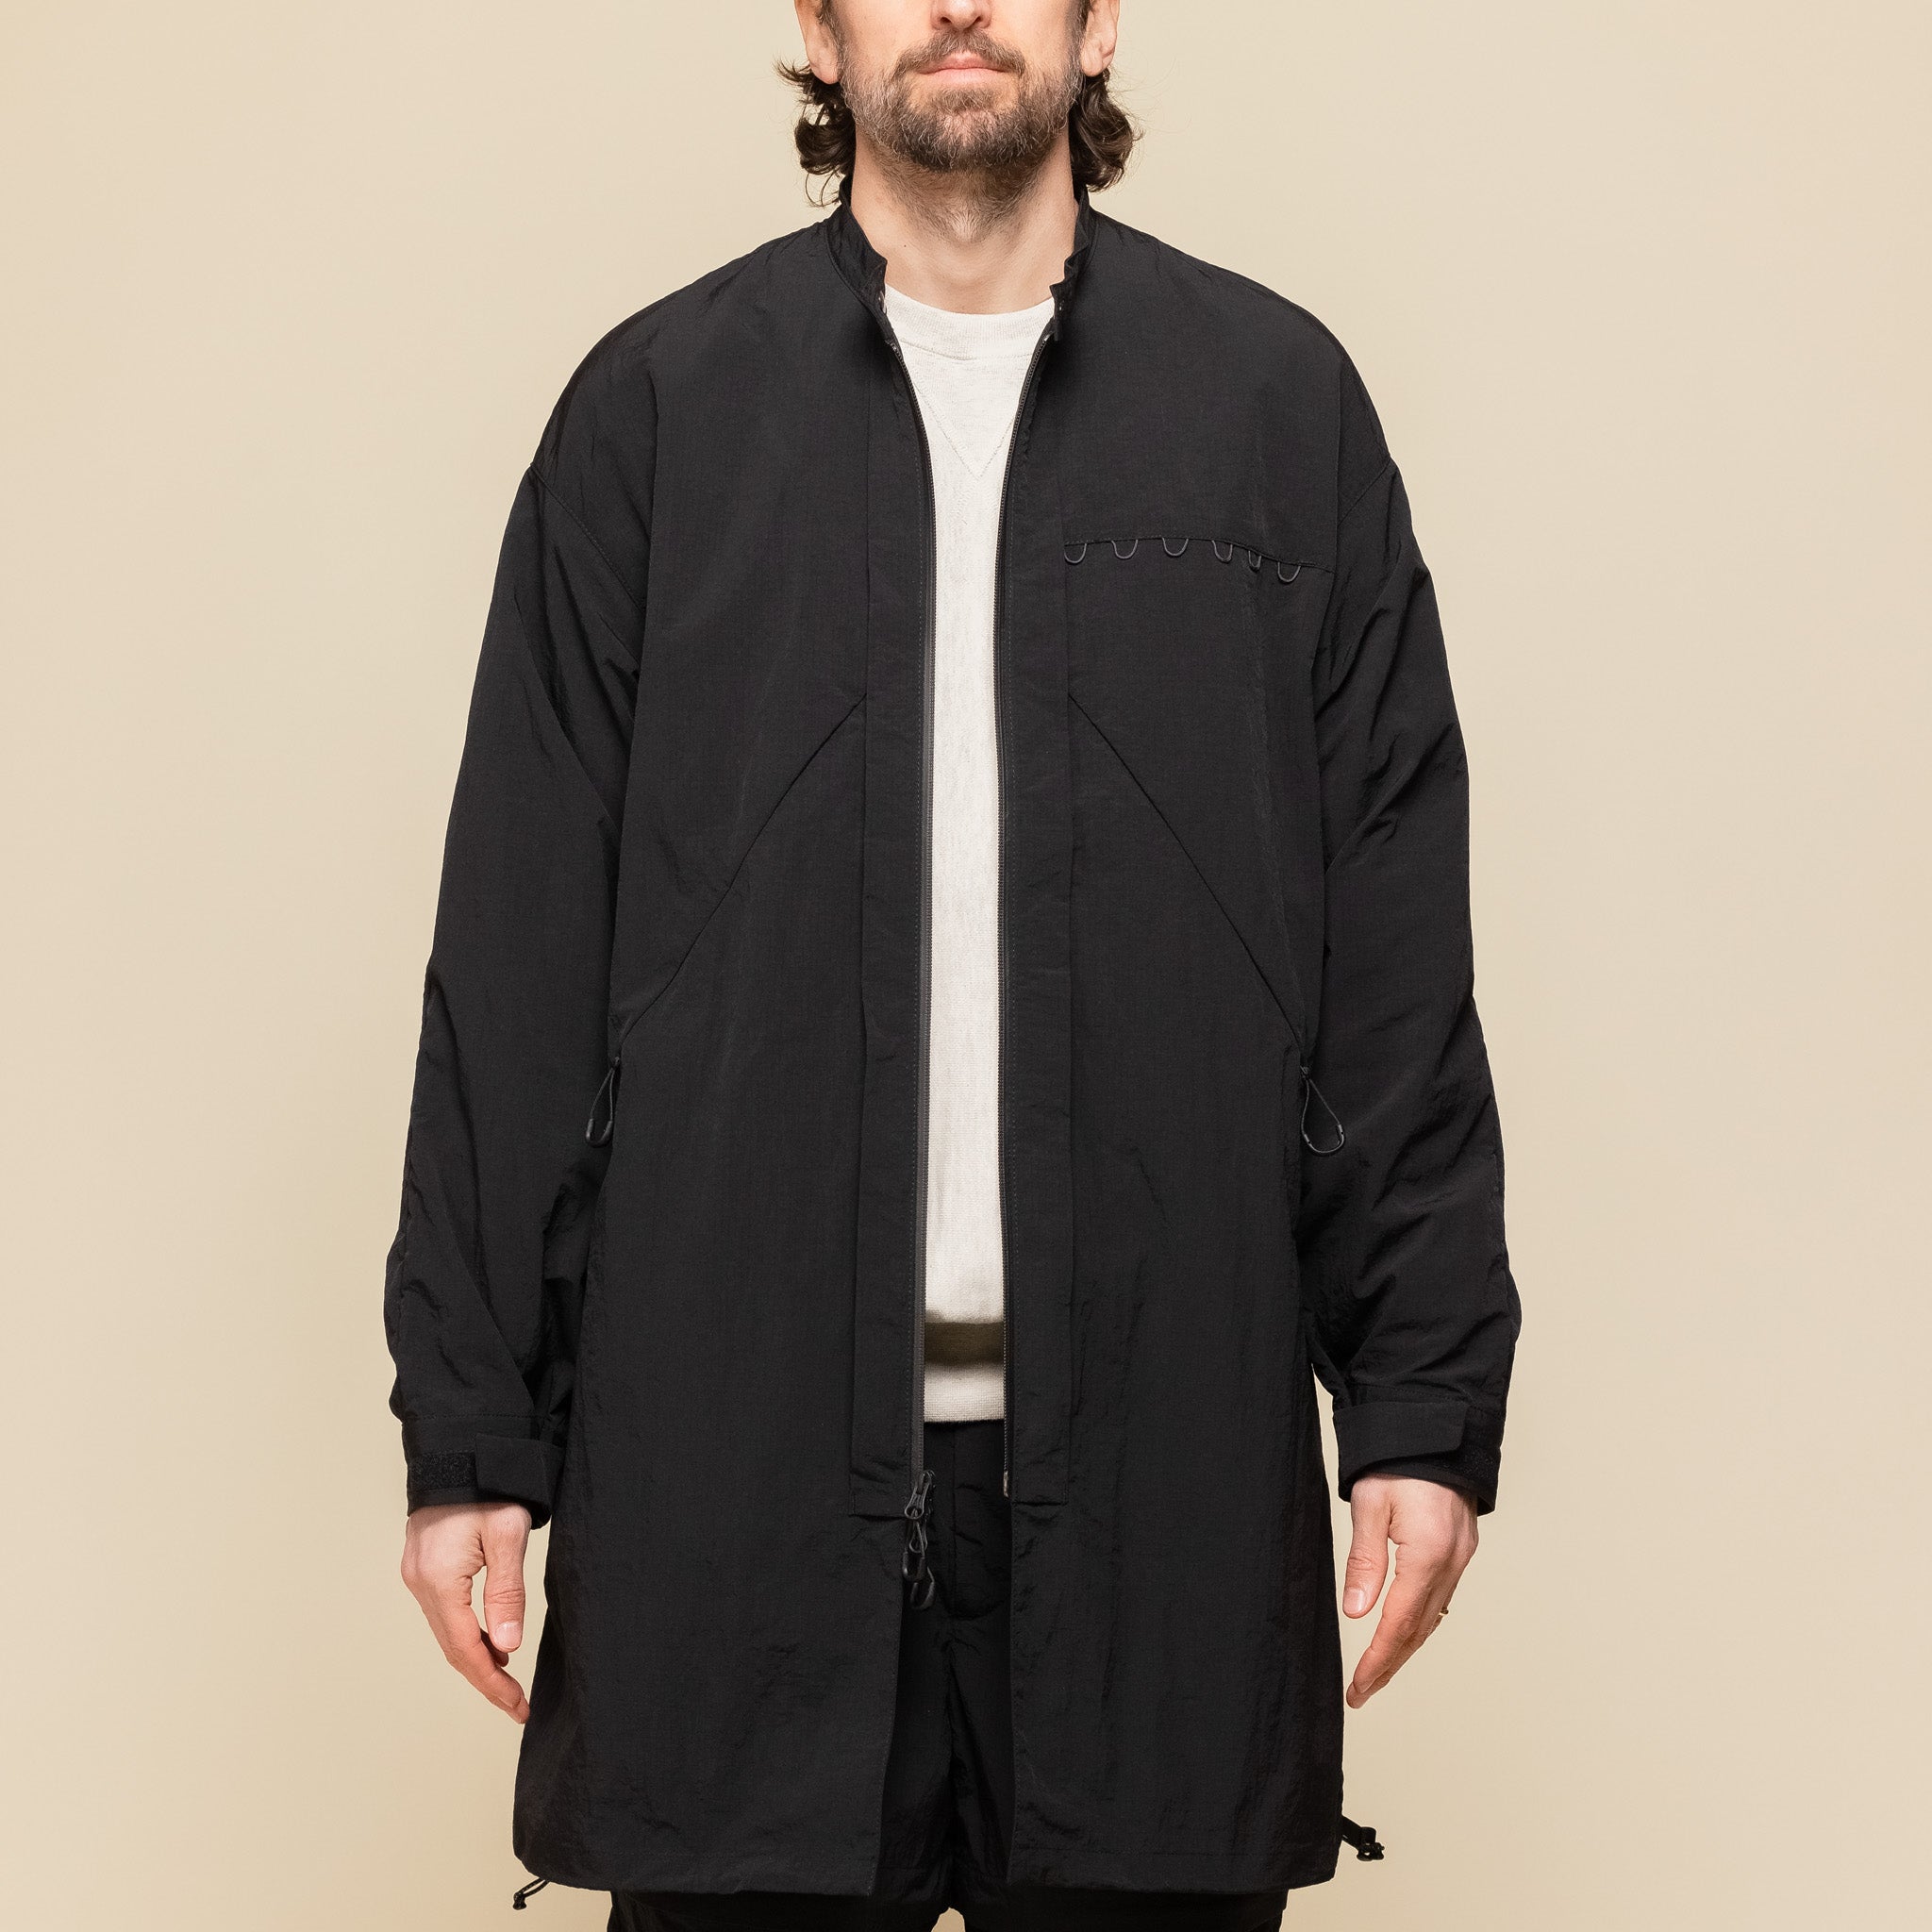 CMF Comfy Outdoor Garment - Untitled Coat - Black